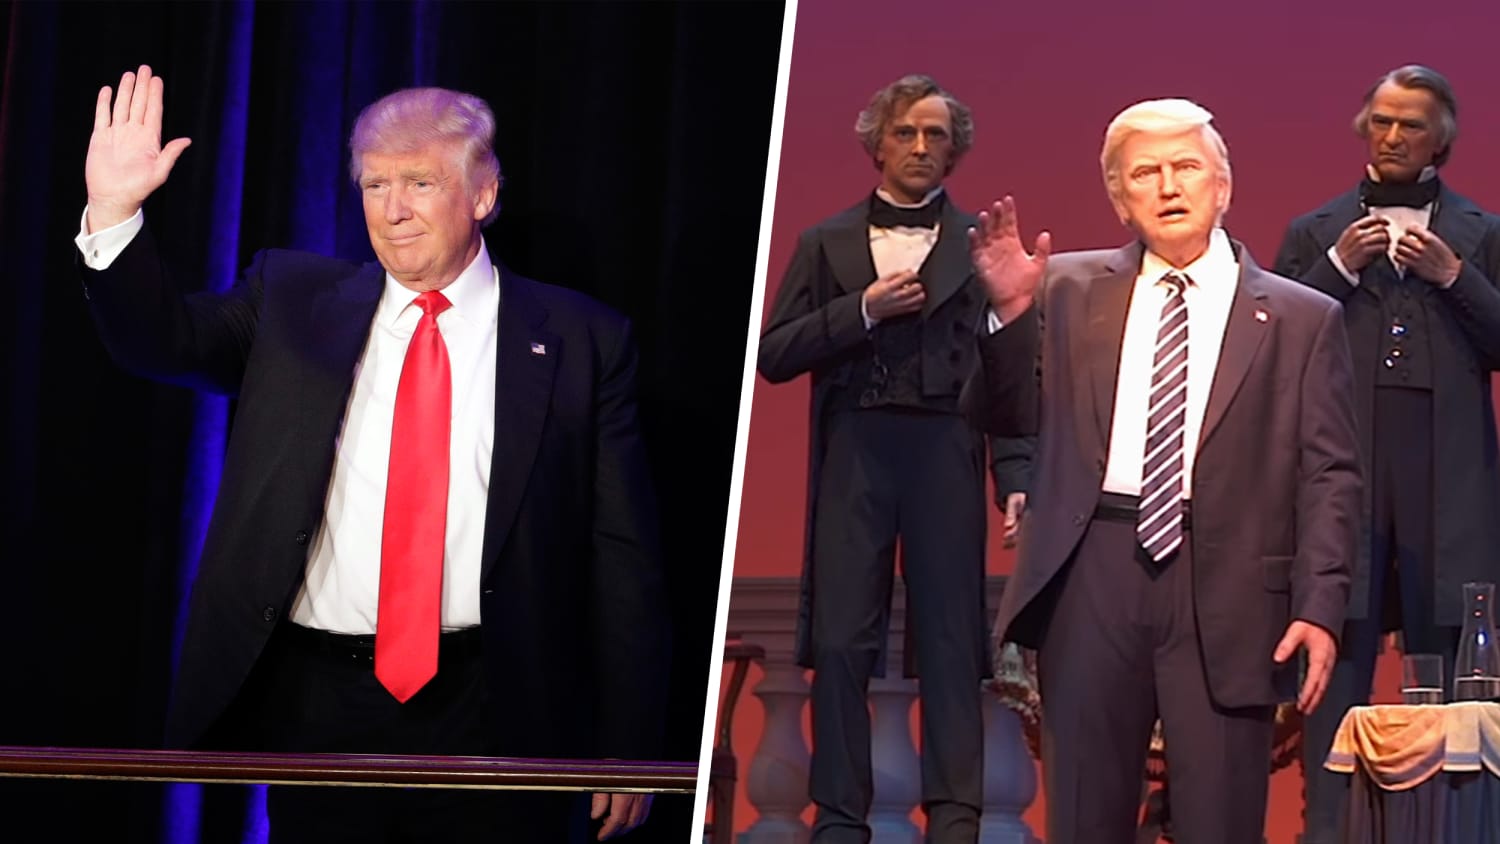 kapitel log opdragelse Disney's animatronic Donald Trump is the robot president of your nightmares